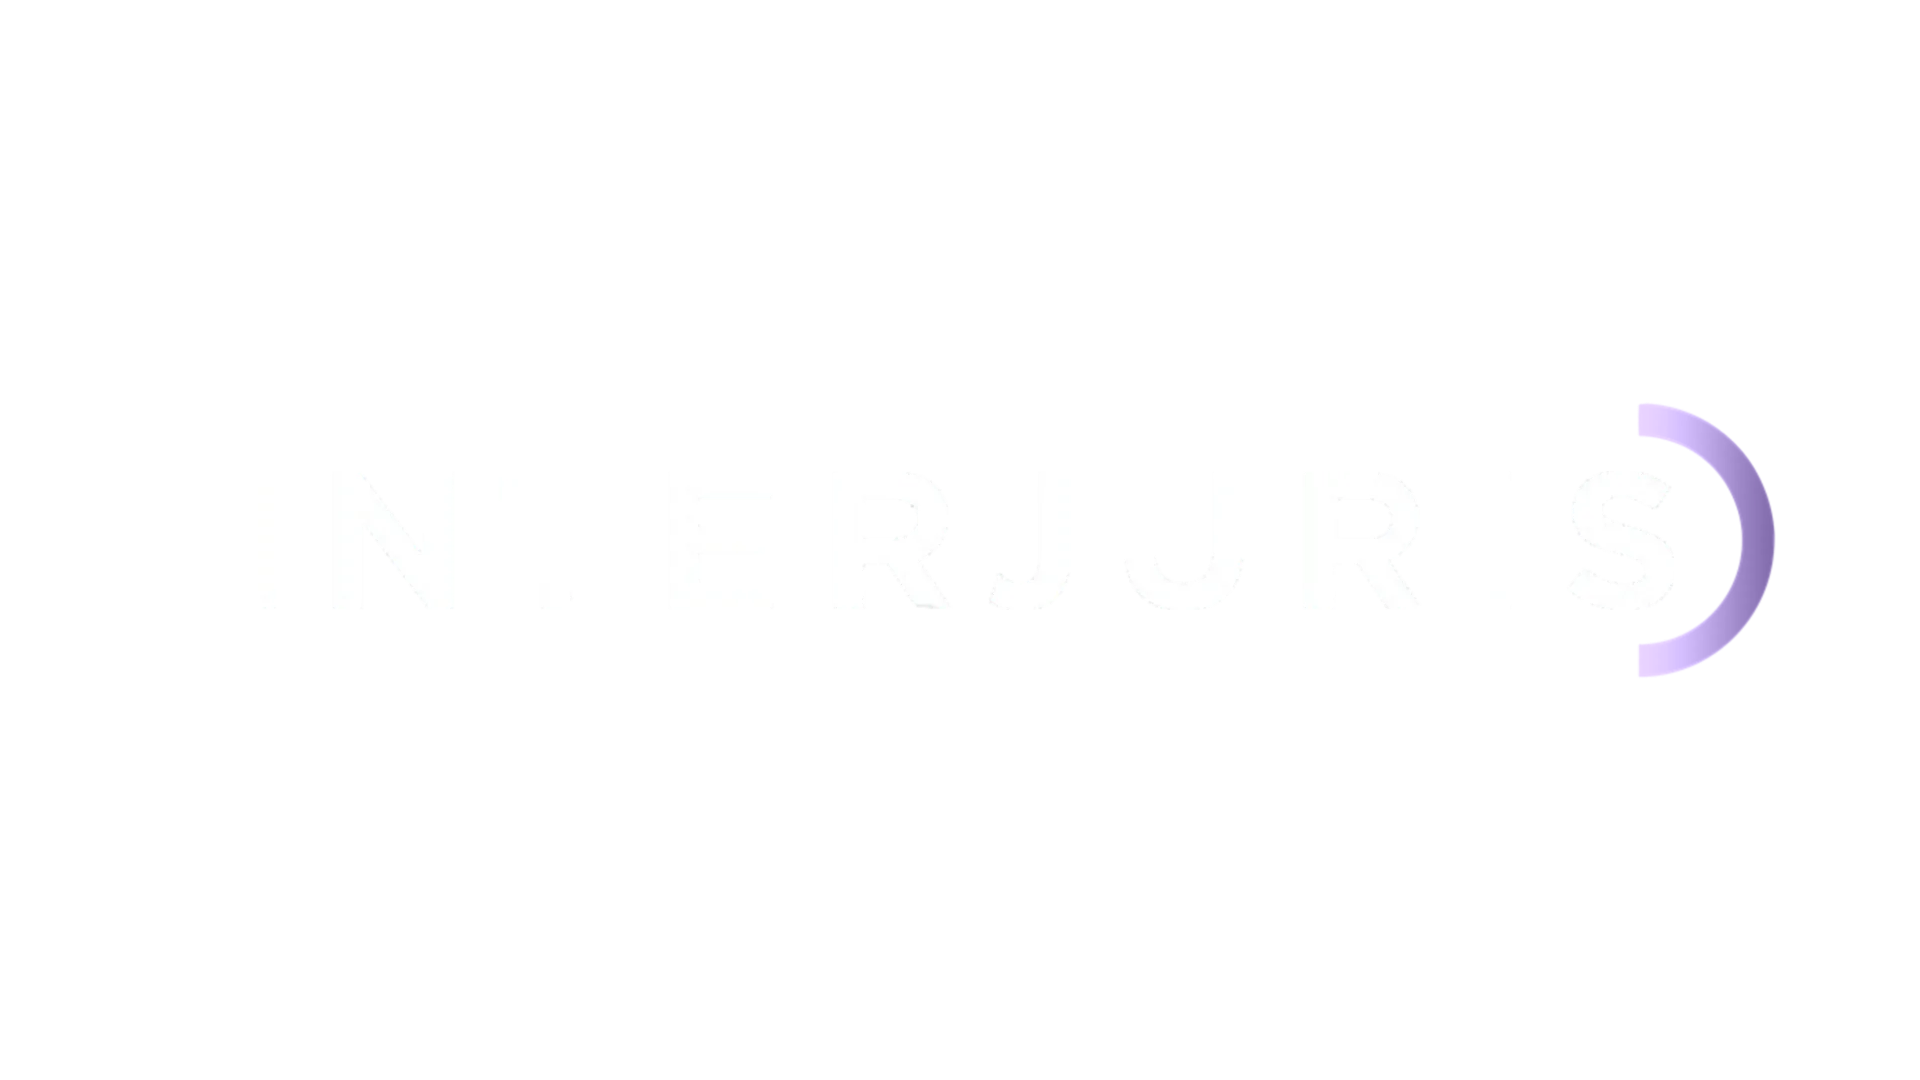 InterJuris Academy